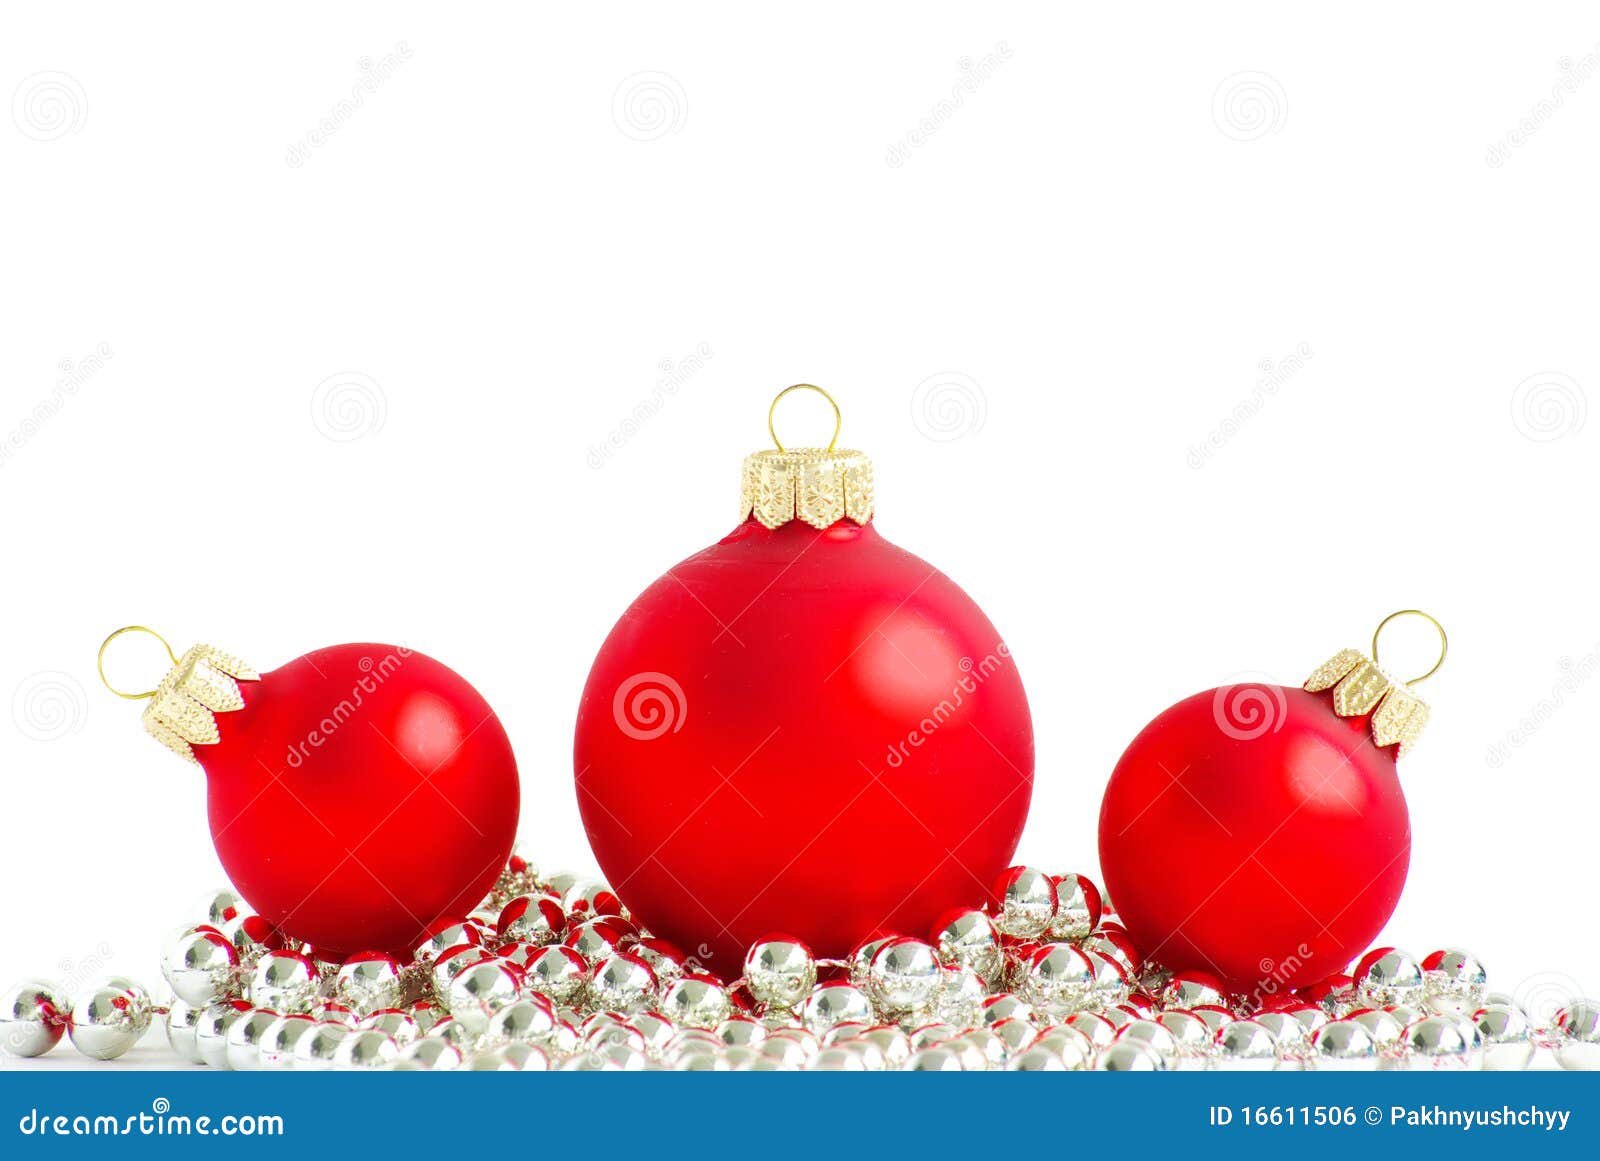 Christmas balls stock photo. Image of xmas, winter, glass - 16611506